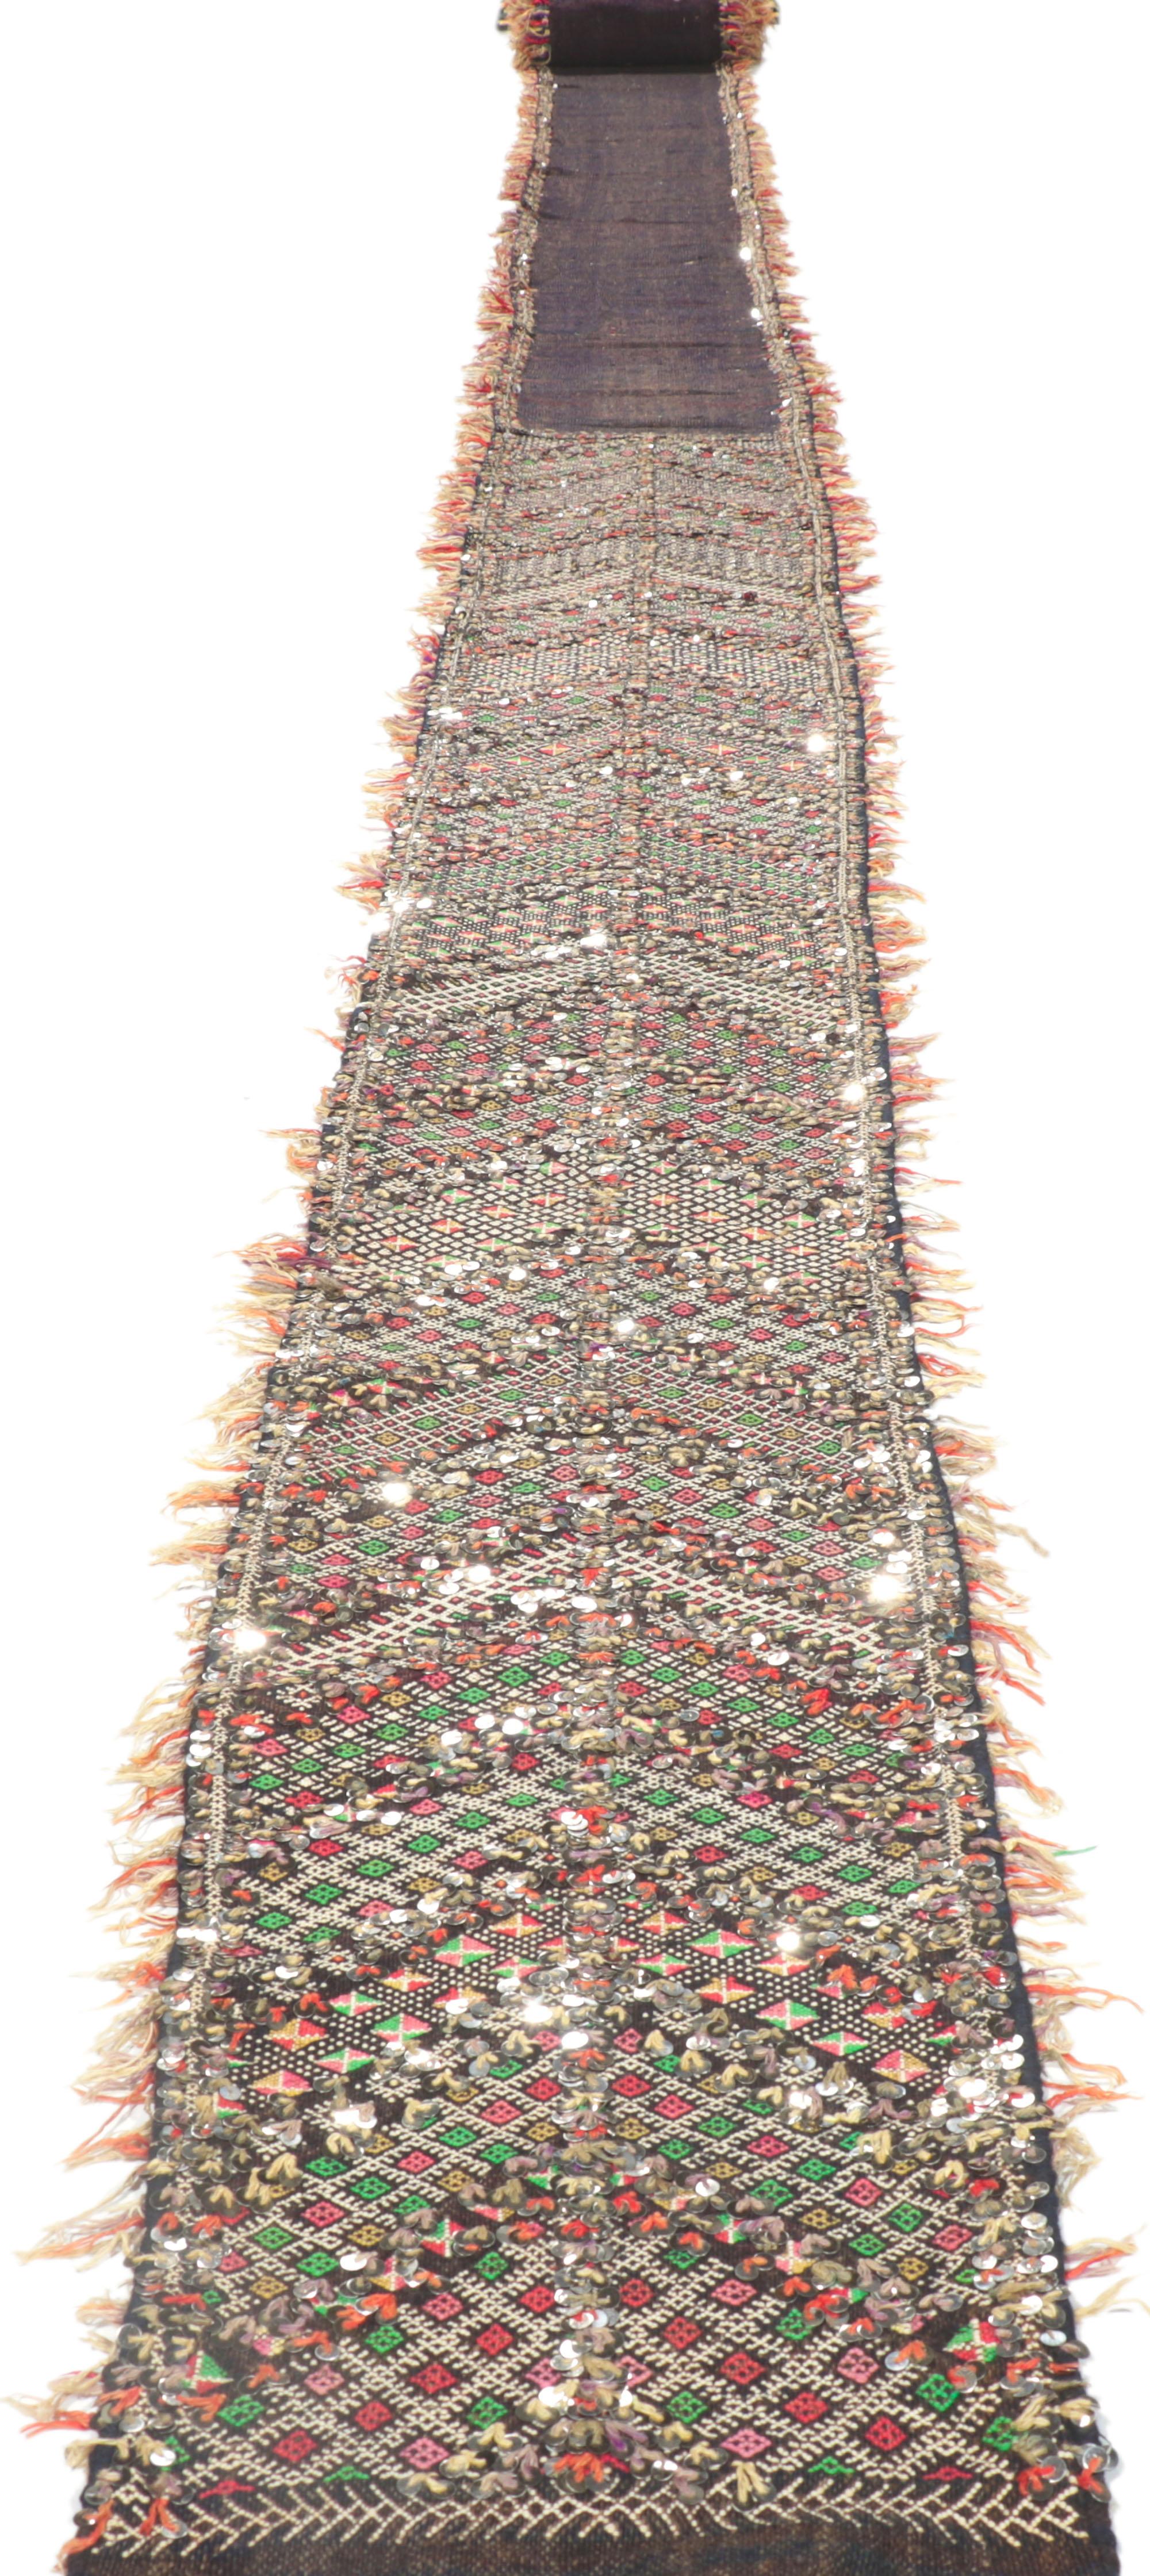 Bohemian Vintage Berber Moroccan Sequined Kilim Rug - Wedding Aisle Runner For Sale